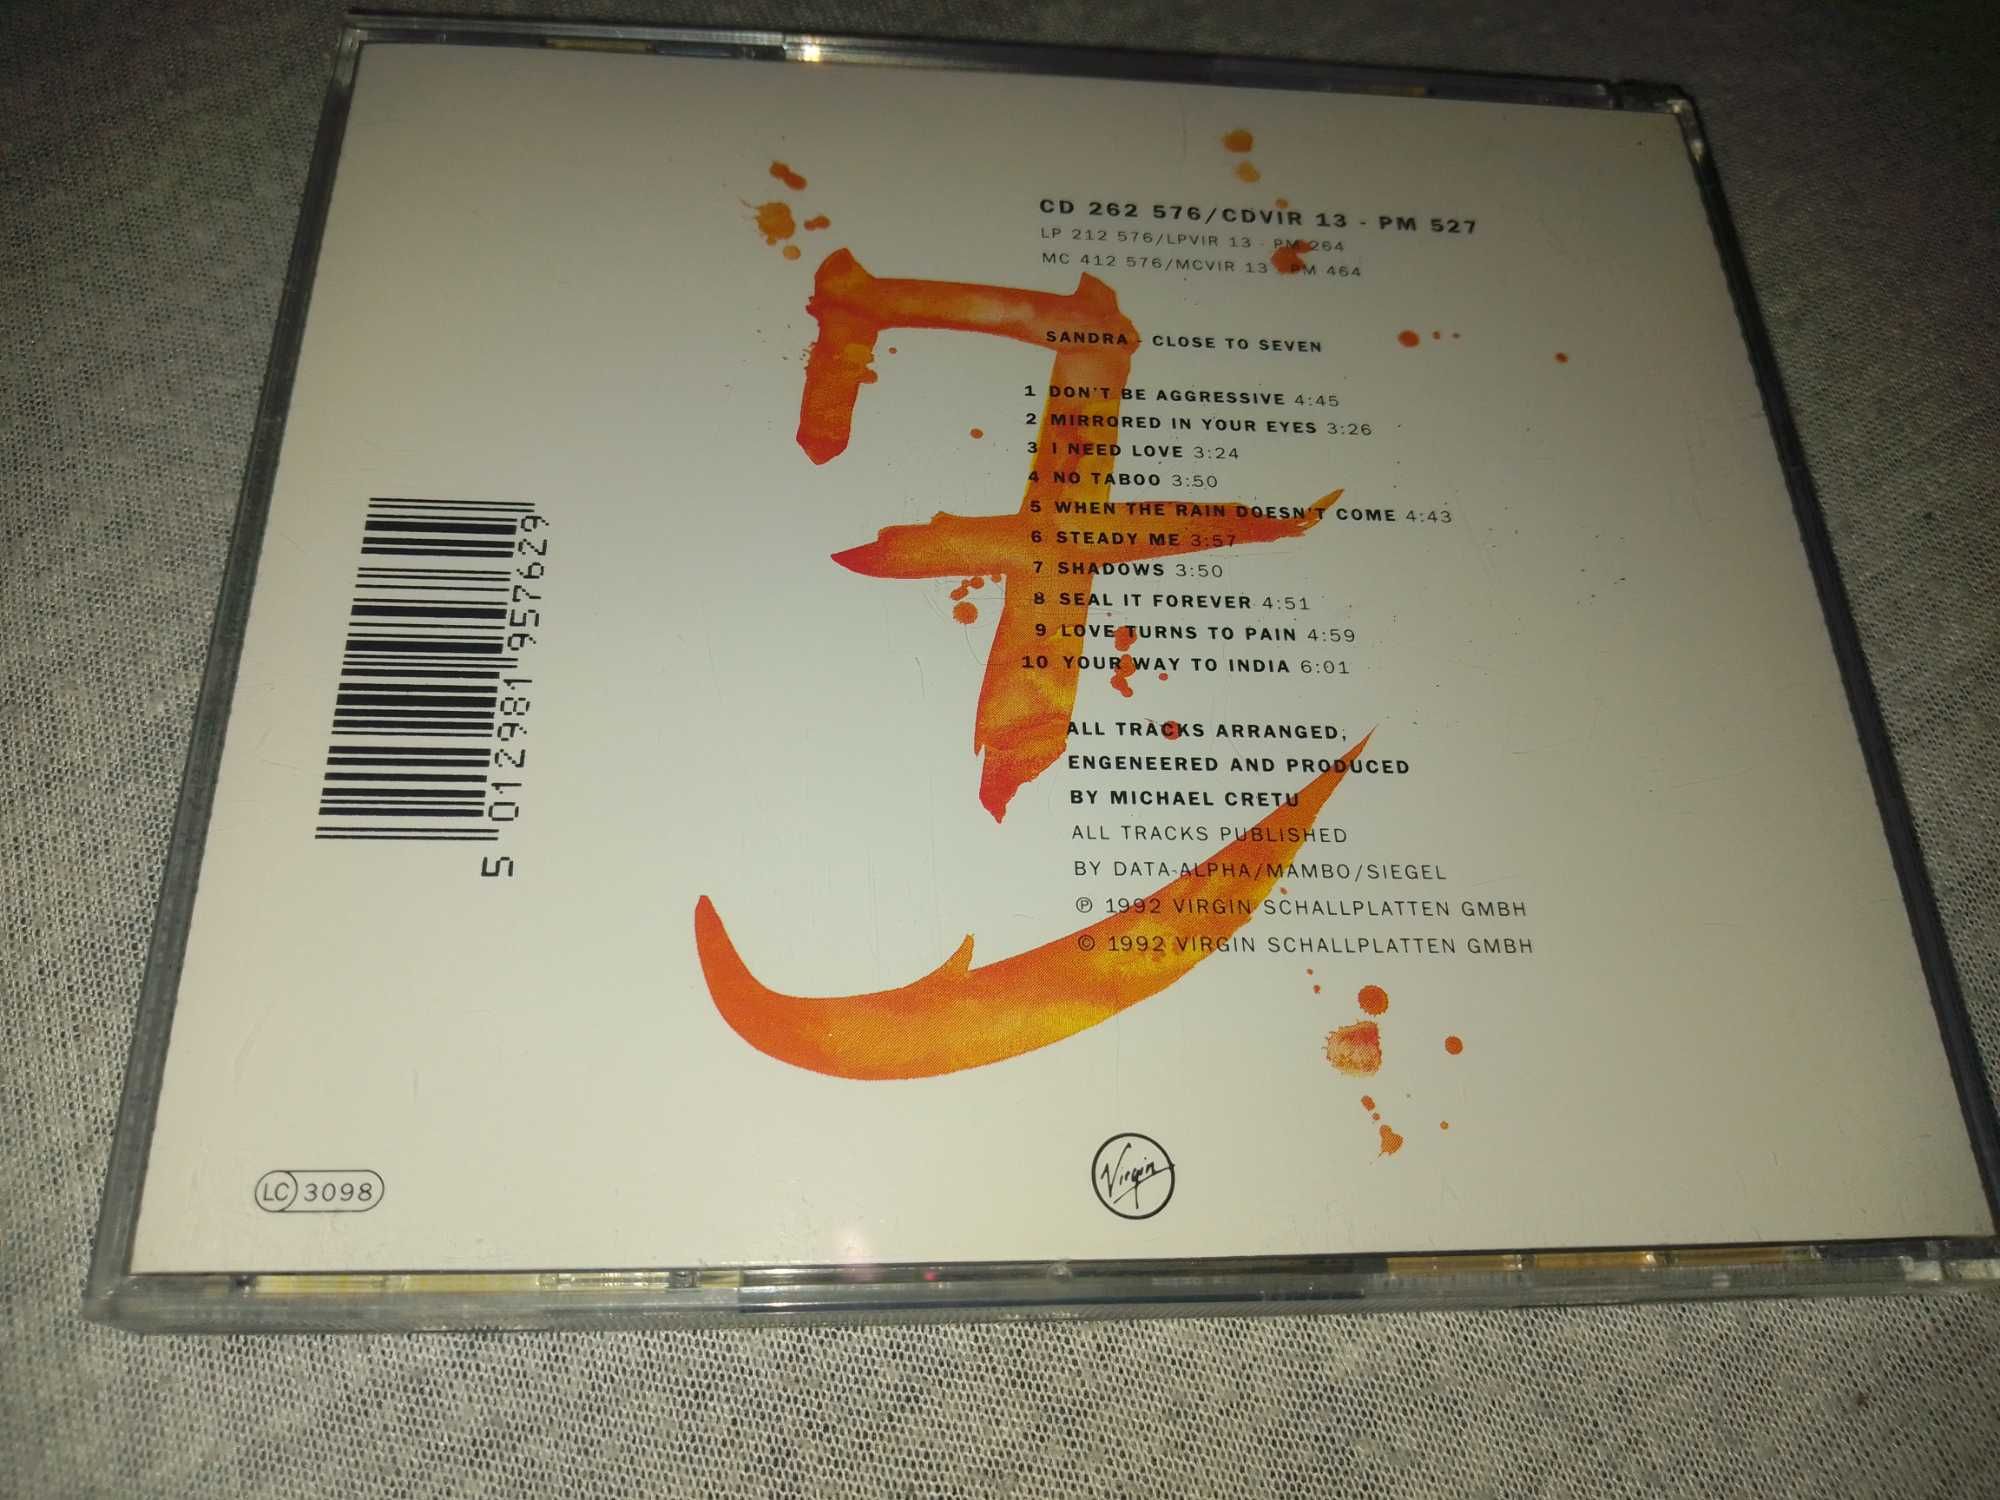 Sandra "Close To Seven" фирменный CD Made In Germany.